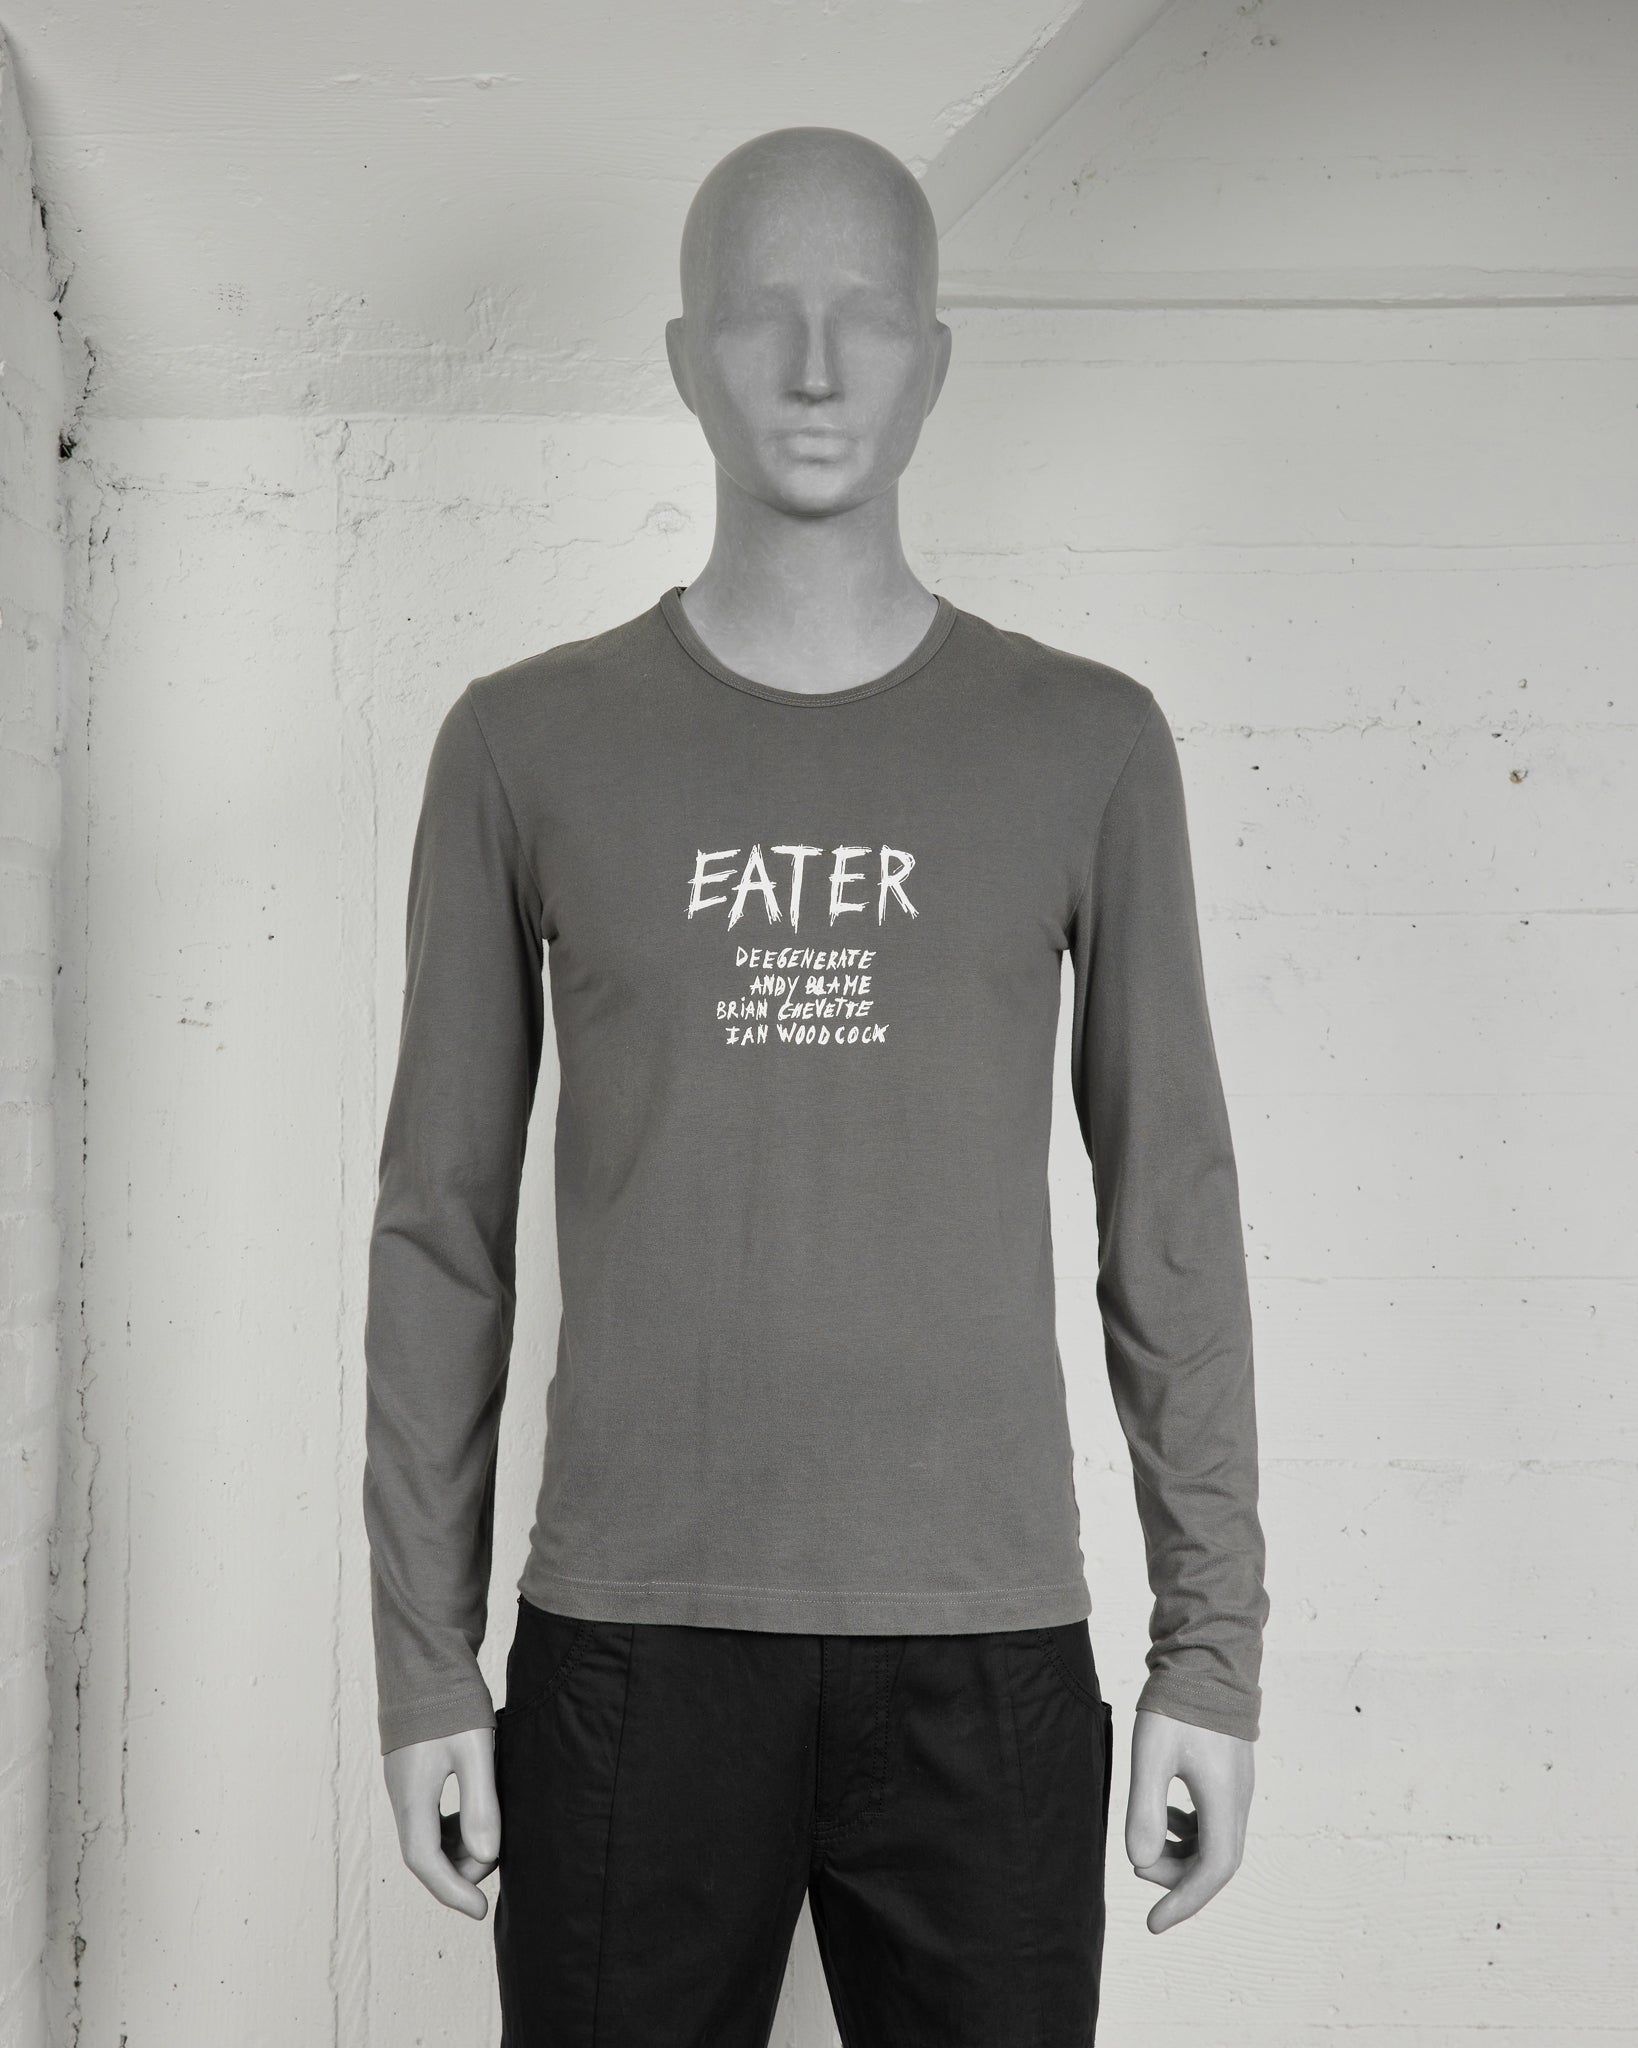 Raf Simons "Eater" Long Sleeve T-Shirt front